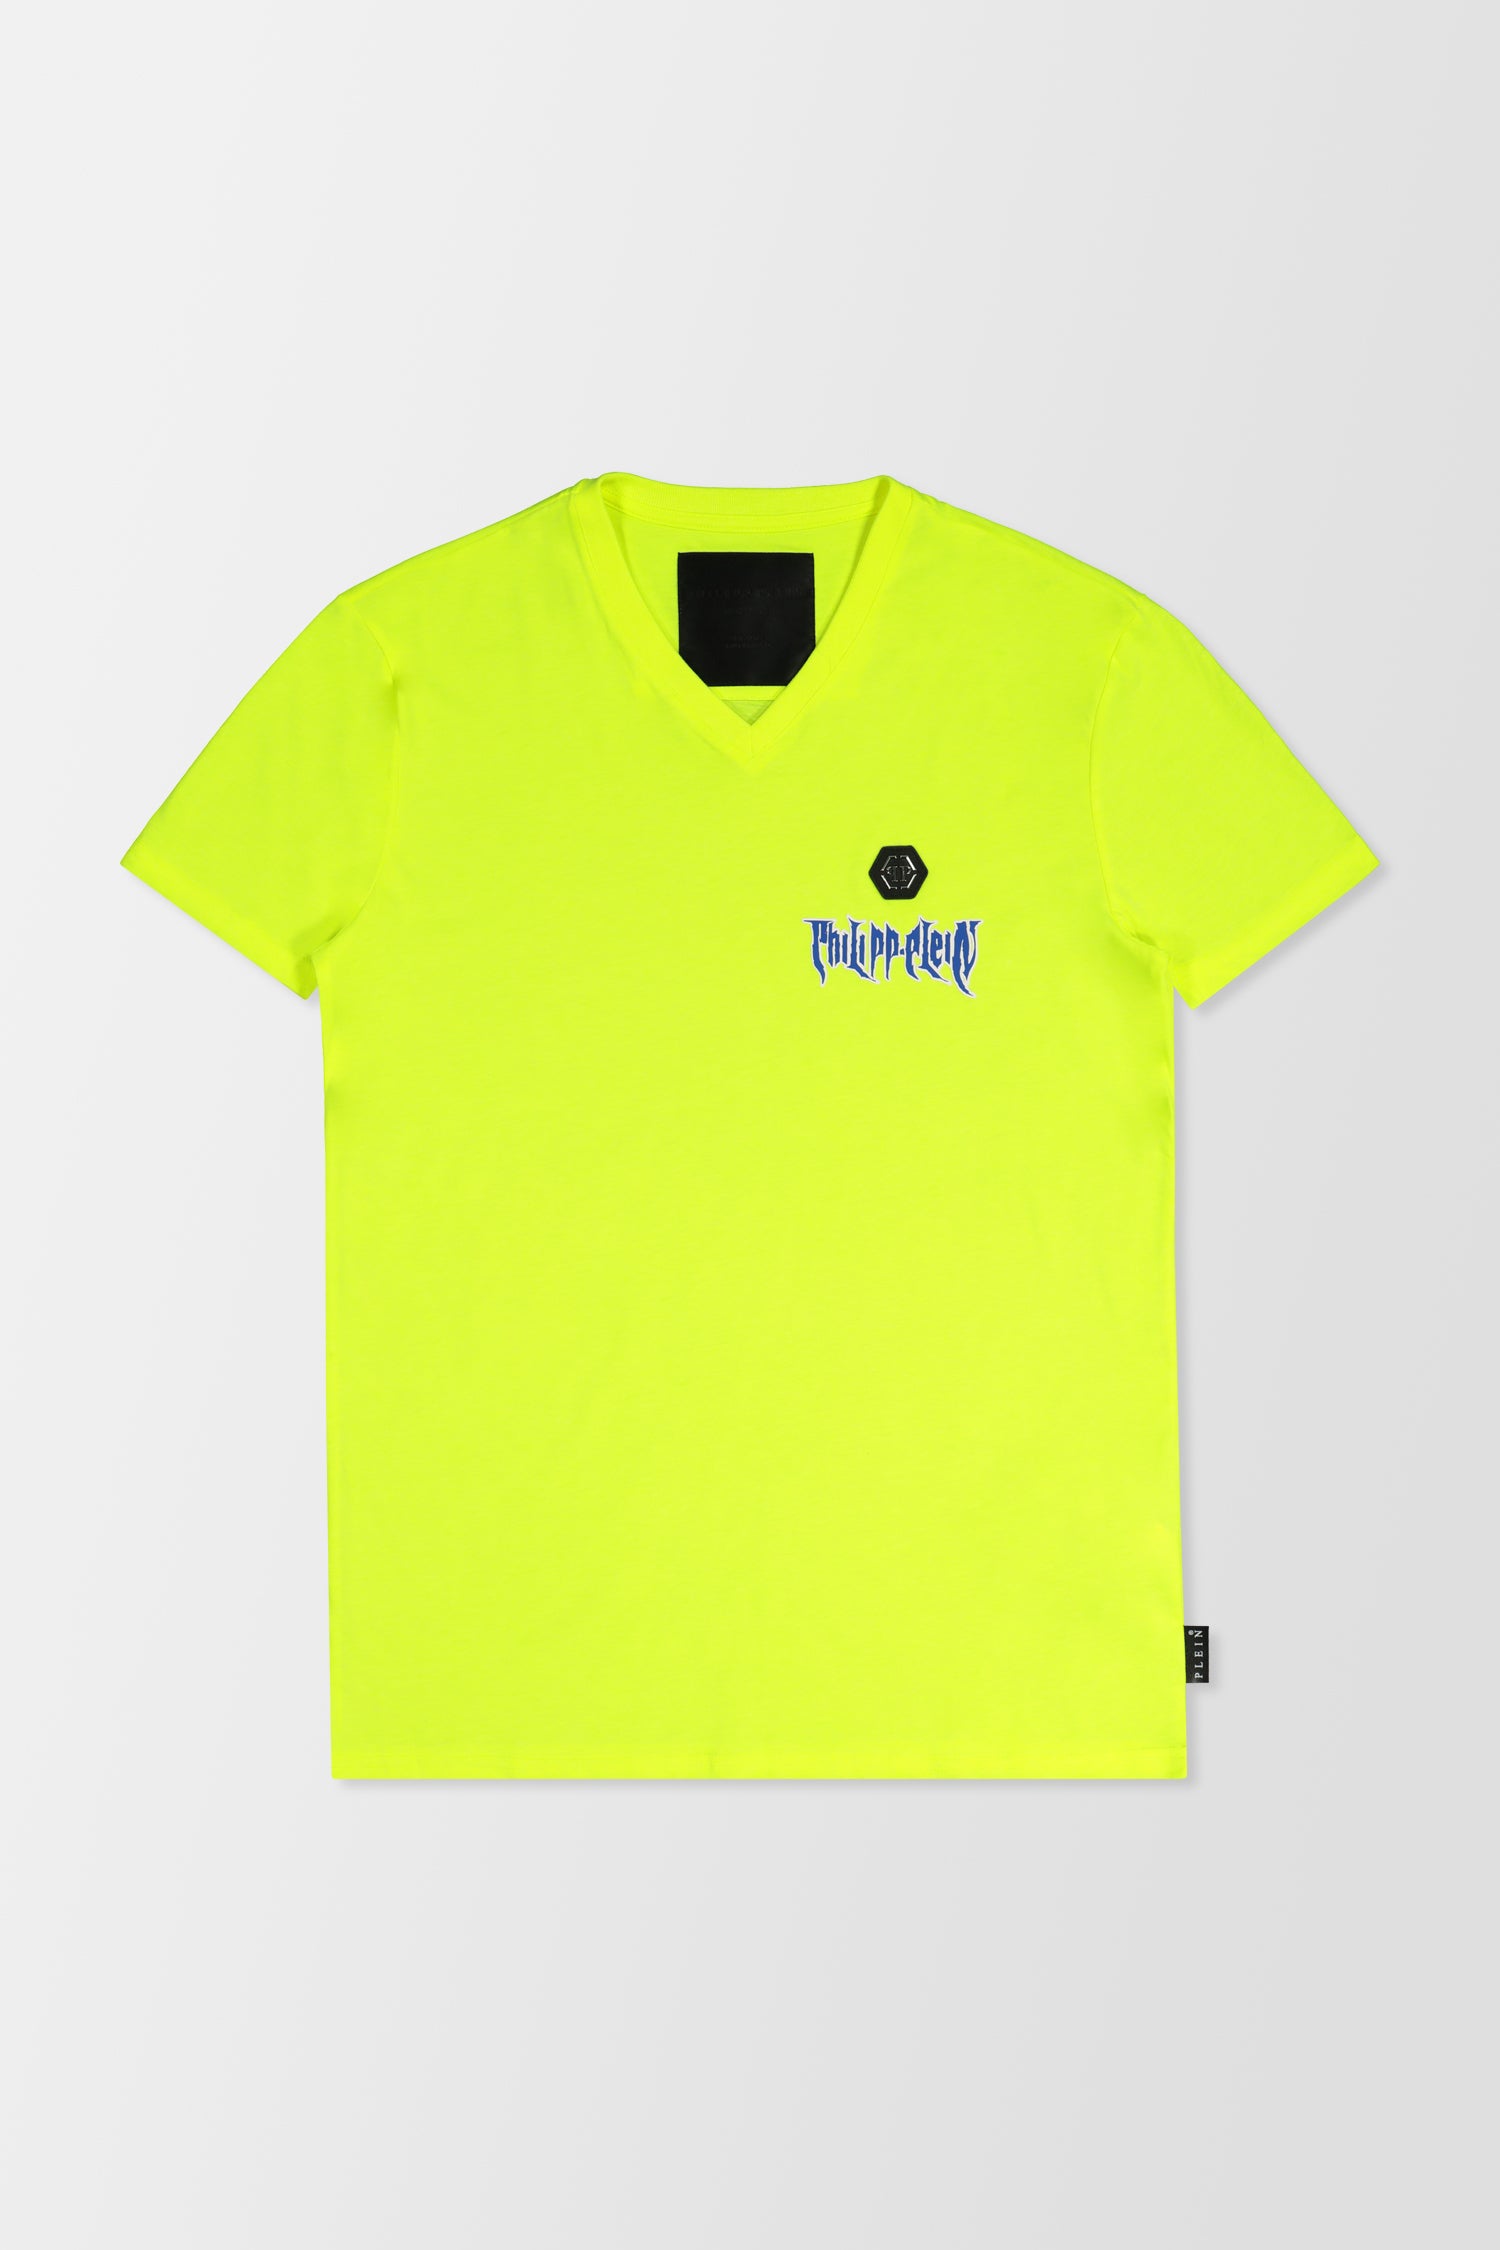 Philipp Plein Yellow SS Rock PP V-Neck T-Shirt